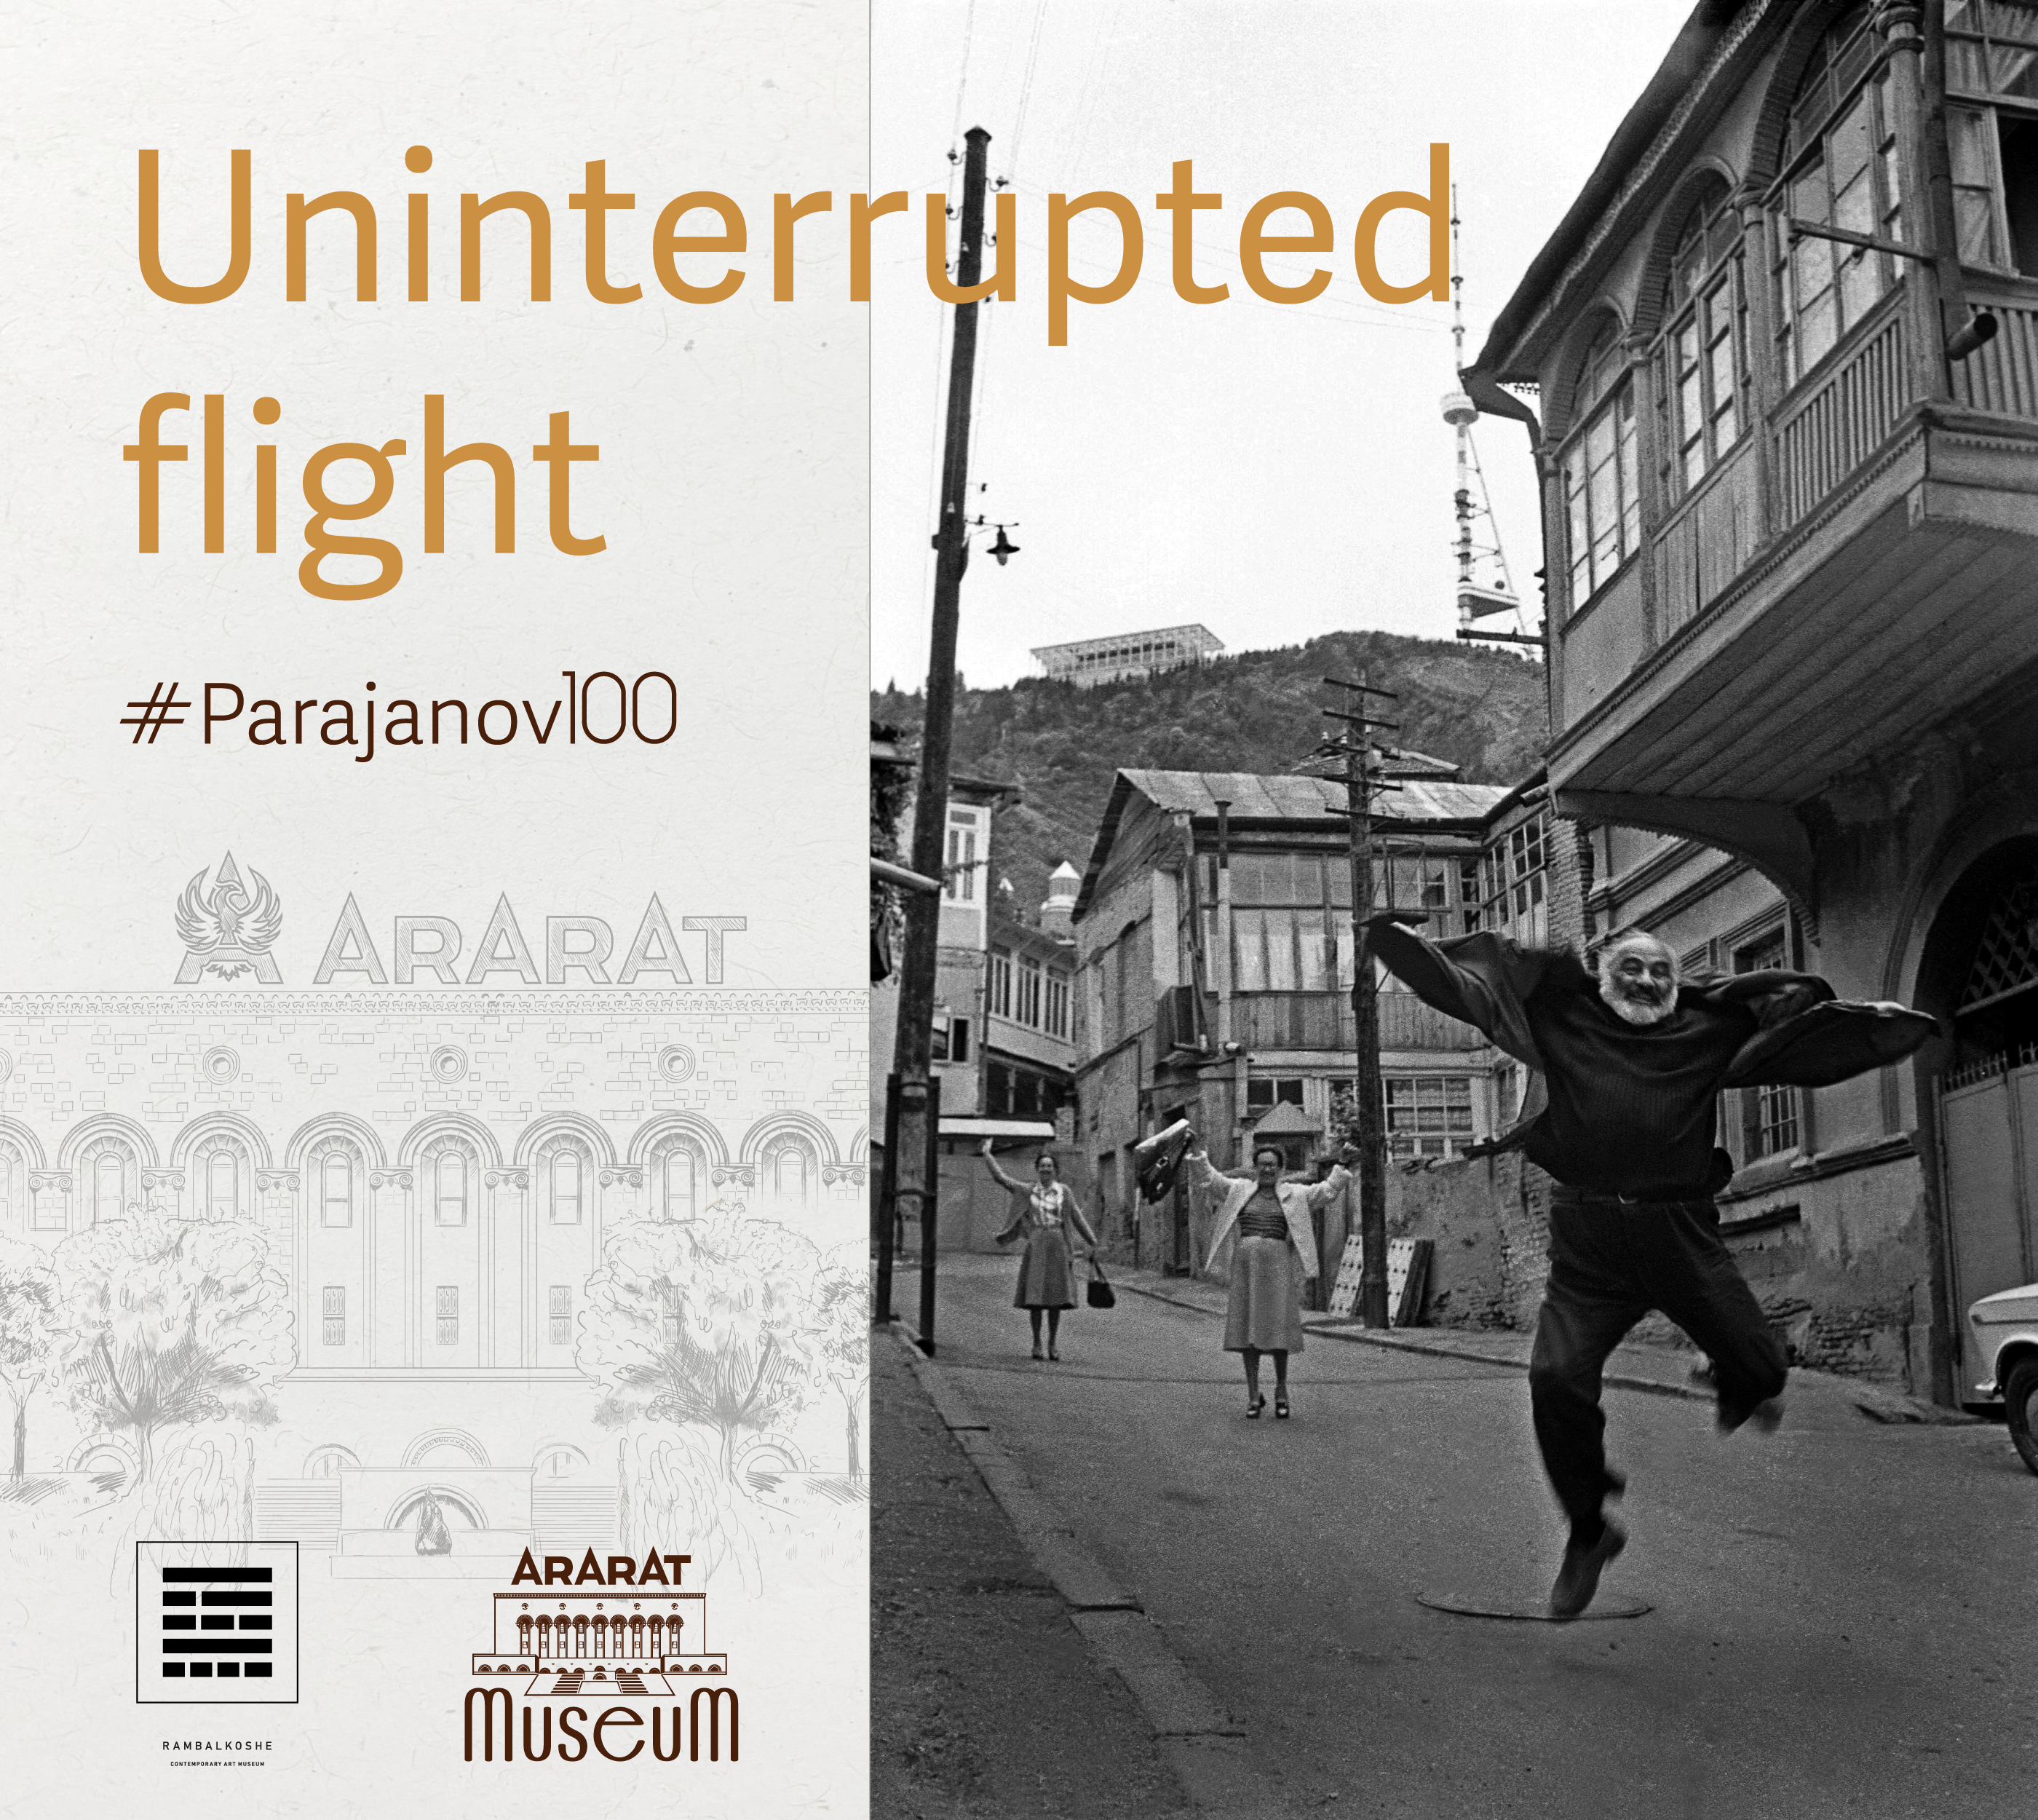 ARARAT Museum Celebrates 100th Anniversary of Sergei Parajanov with "Uninterrupted Flight" Exhibition